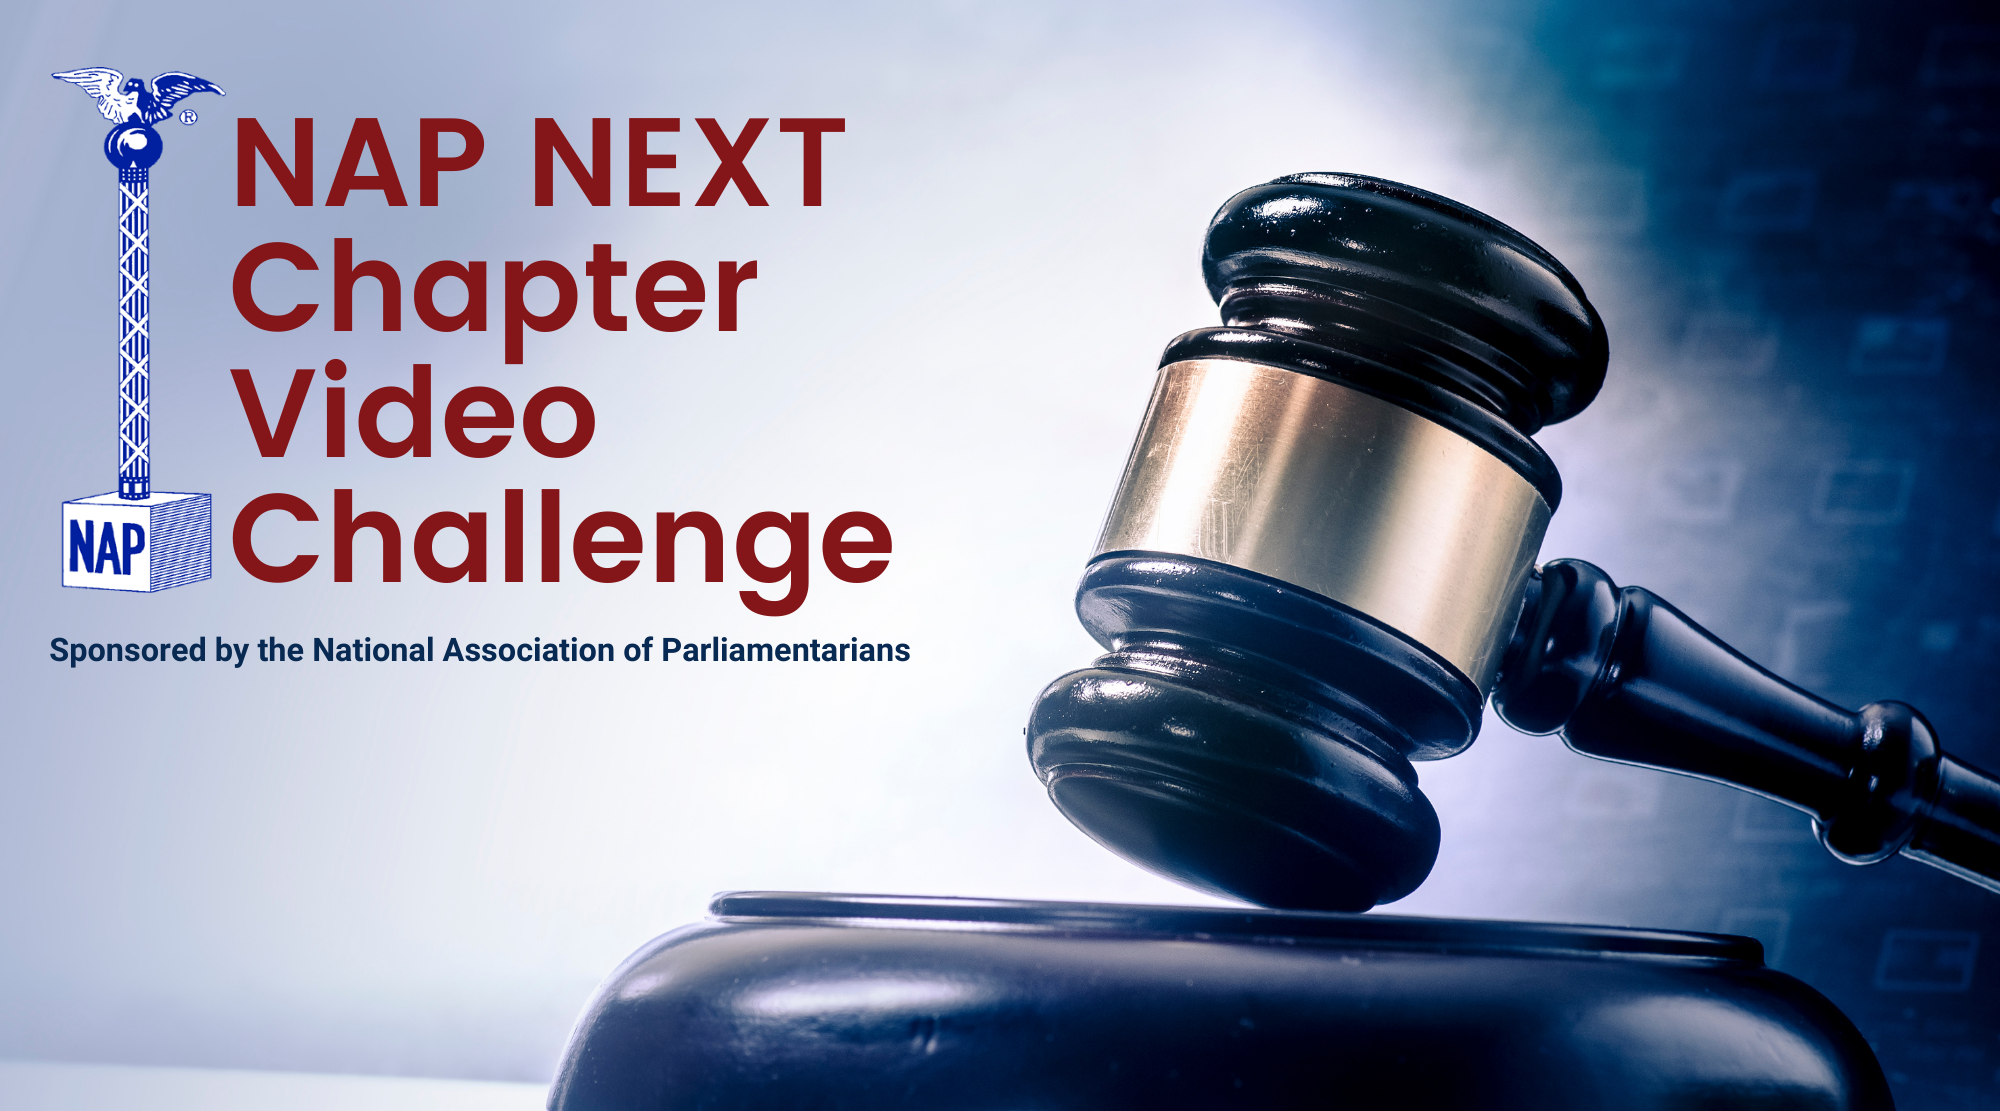 NAP NEXT Chapter Video Challenge